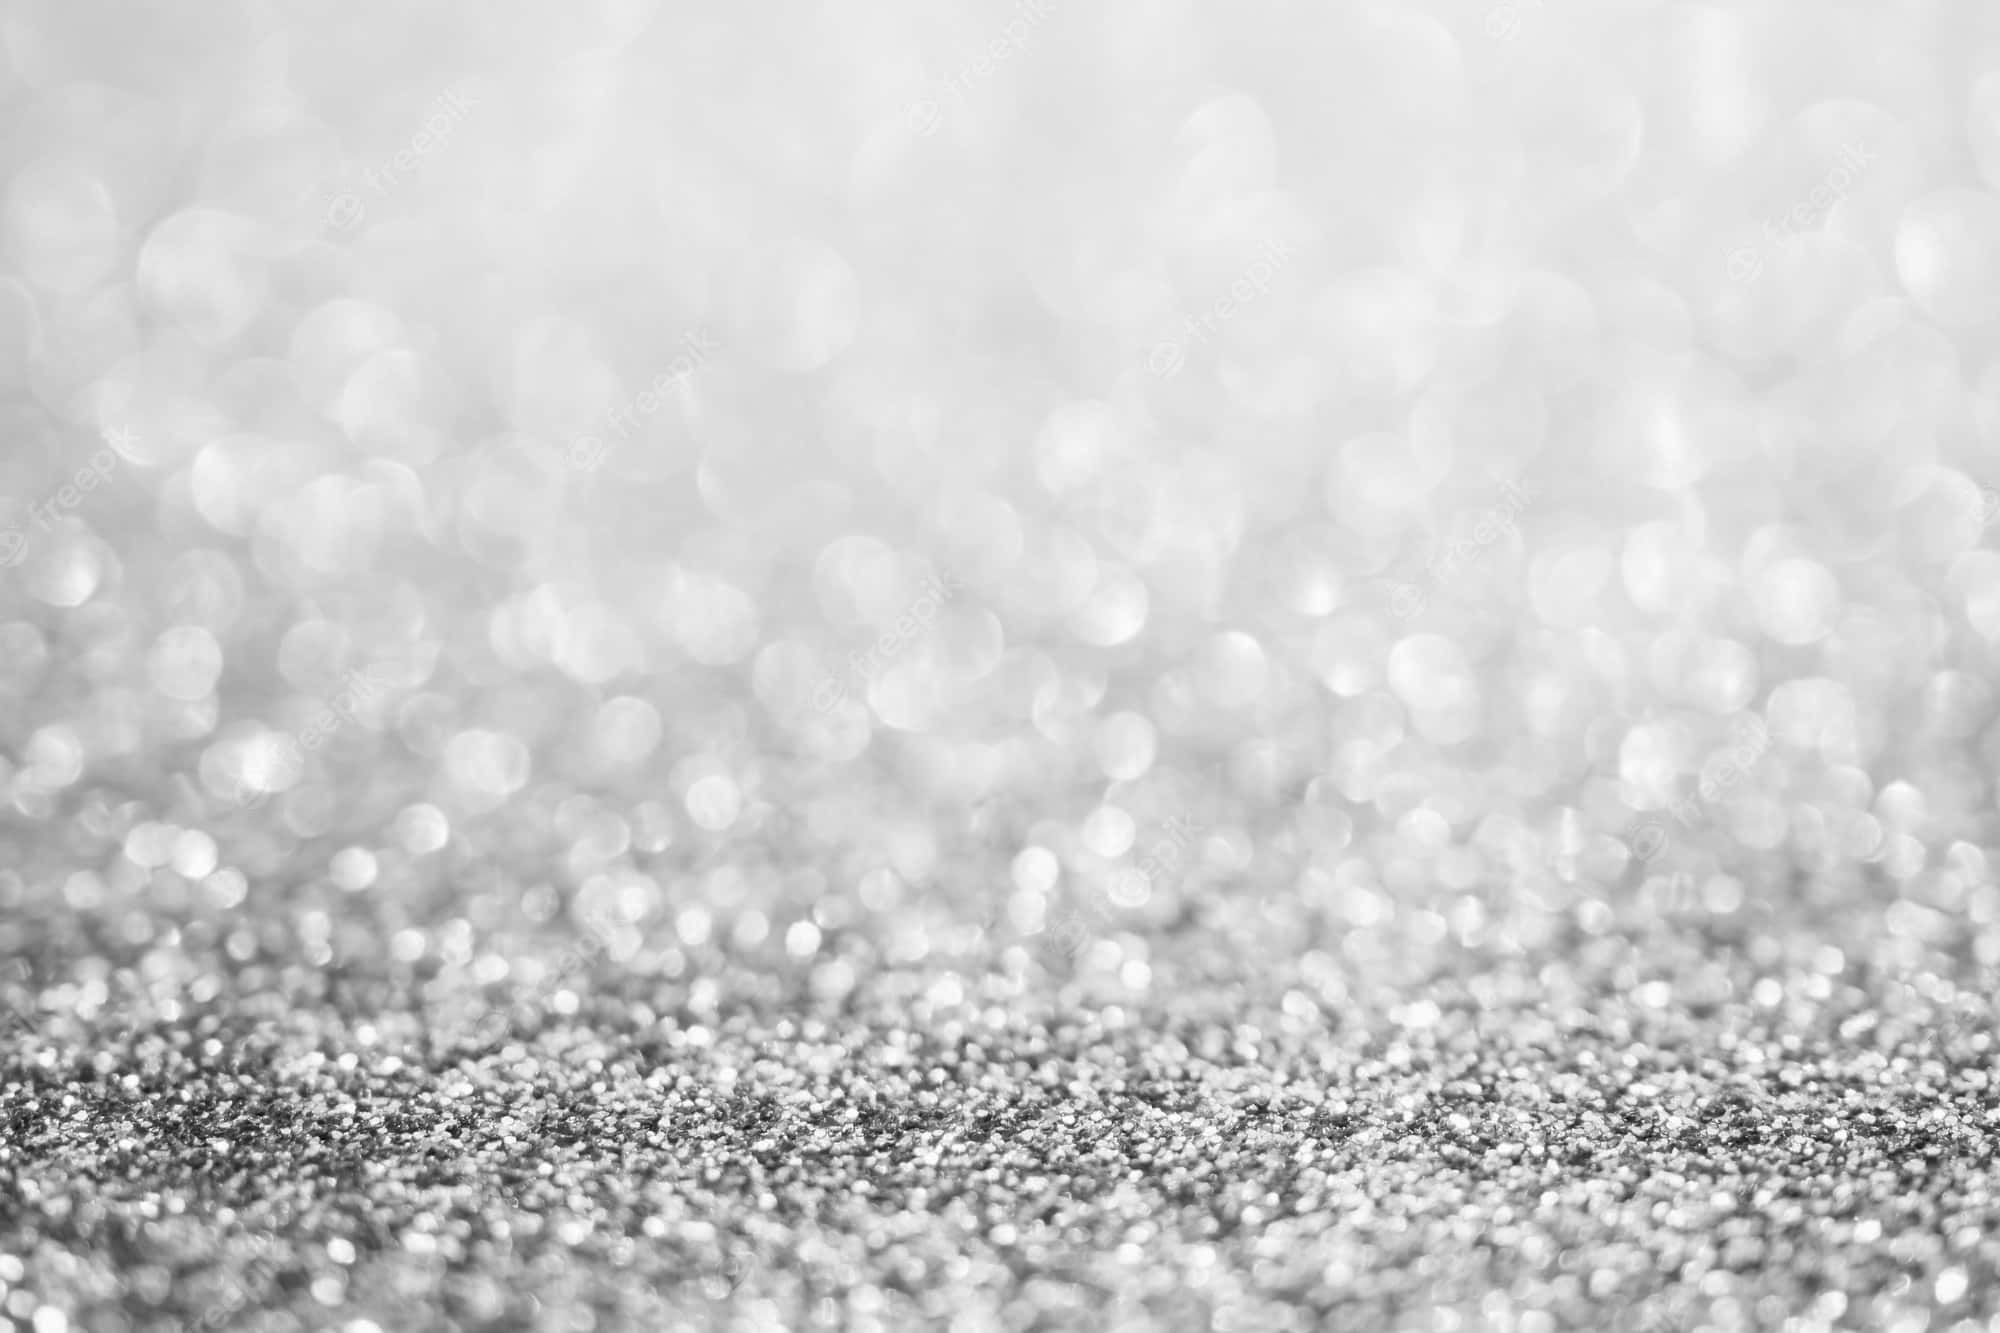 100+] Sparkle Silver Glitter Backgrounds